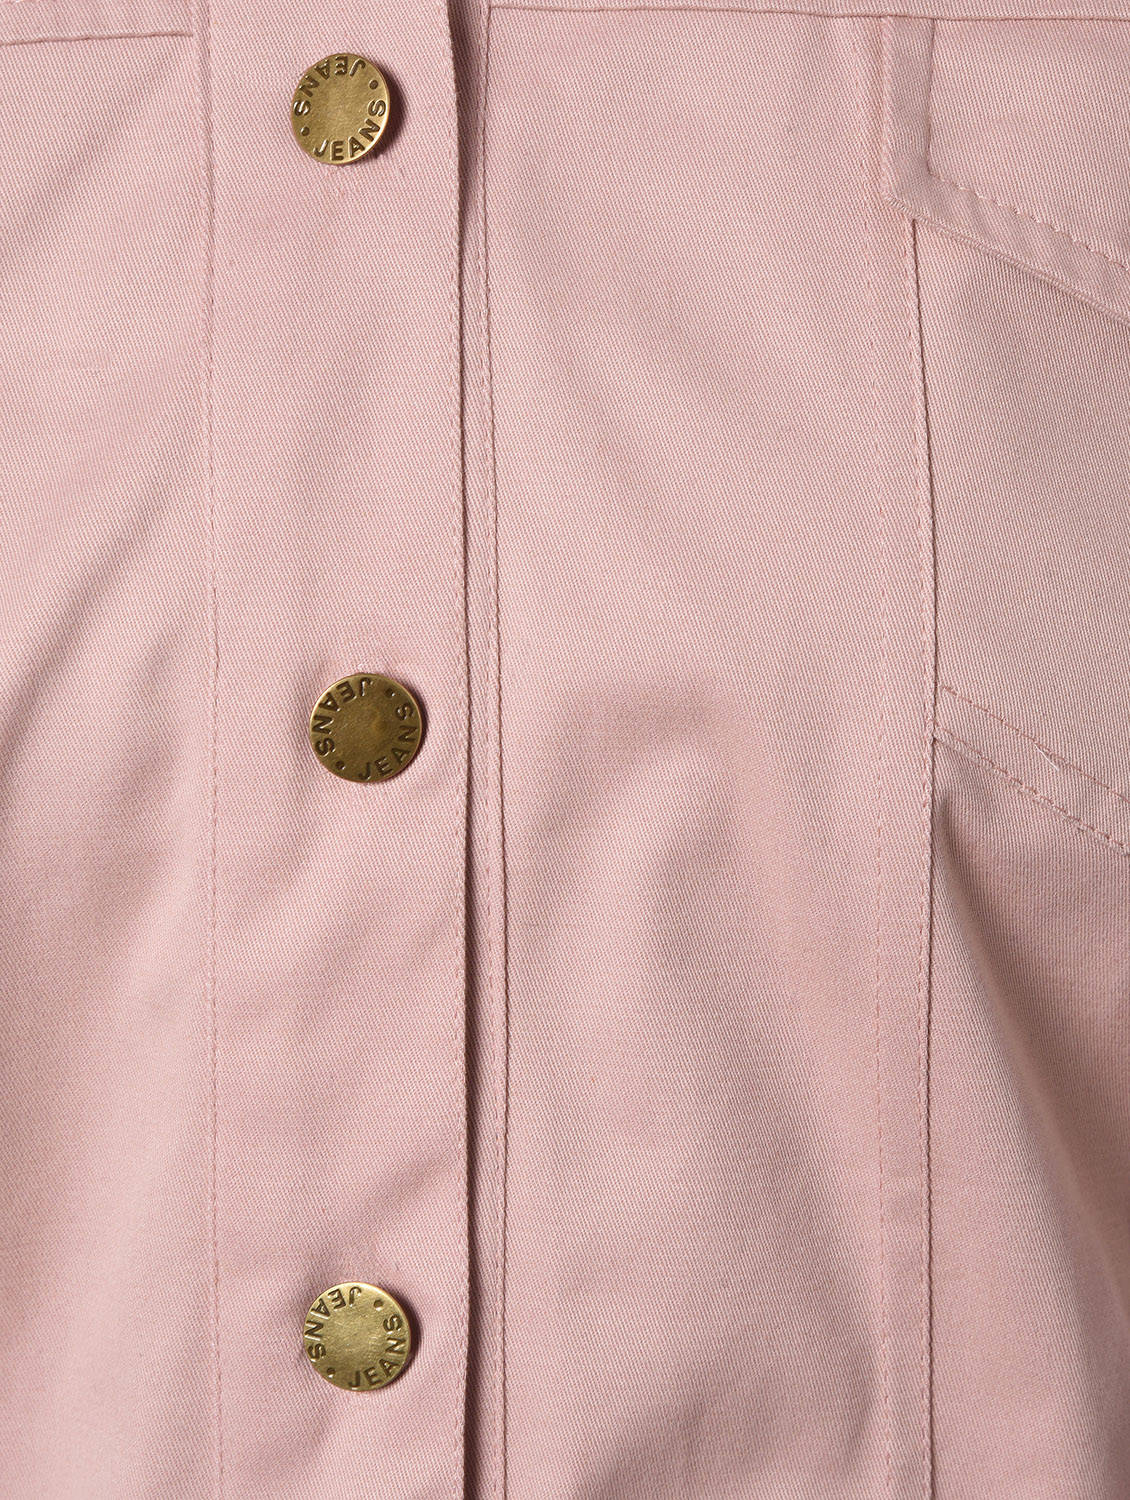 Shirt collar denim jacket